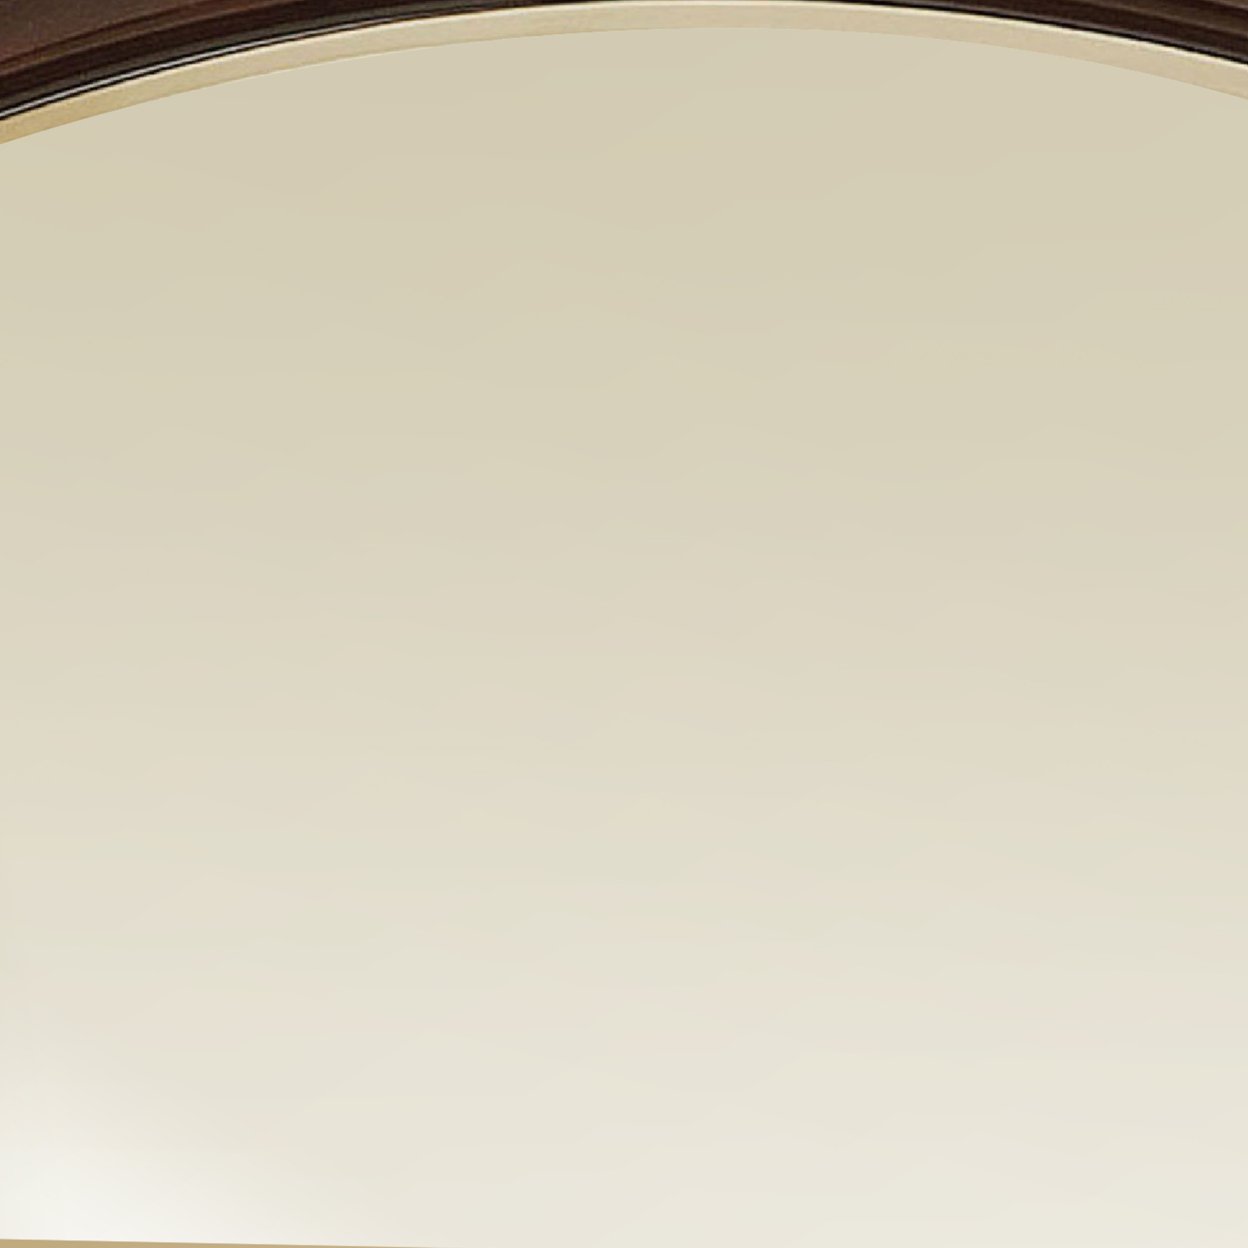 Glan 42 Inch Wall Mirror, Molded Trim Wood Frame, Curved Top, Dark Brown- Saltoro Sherpi